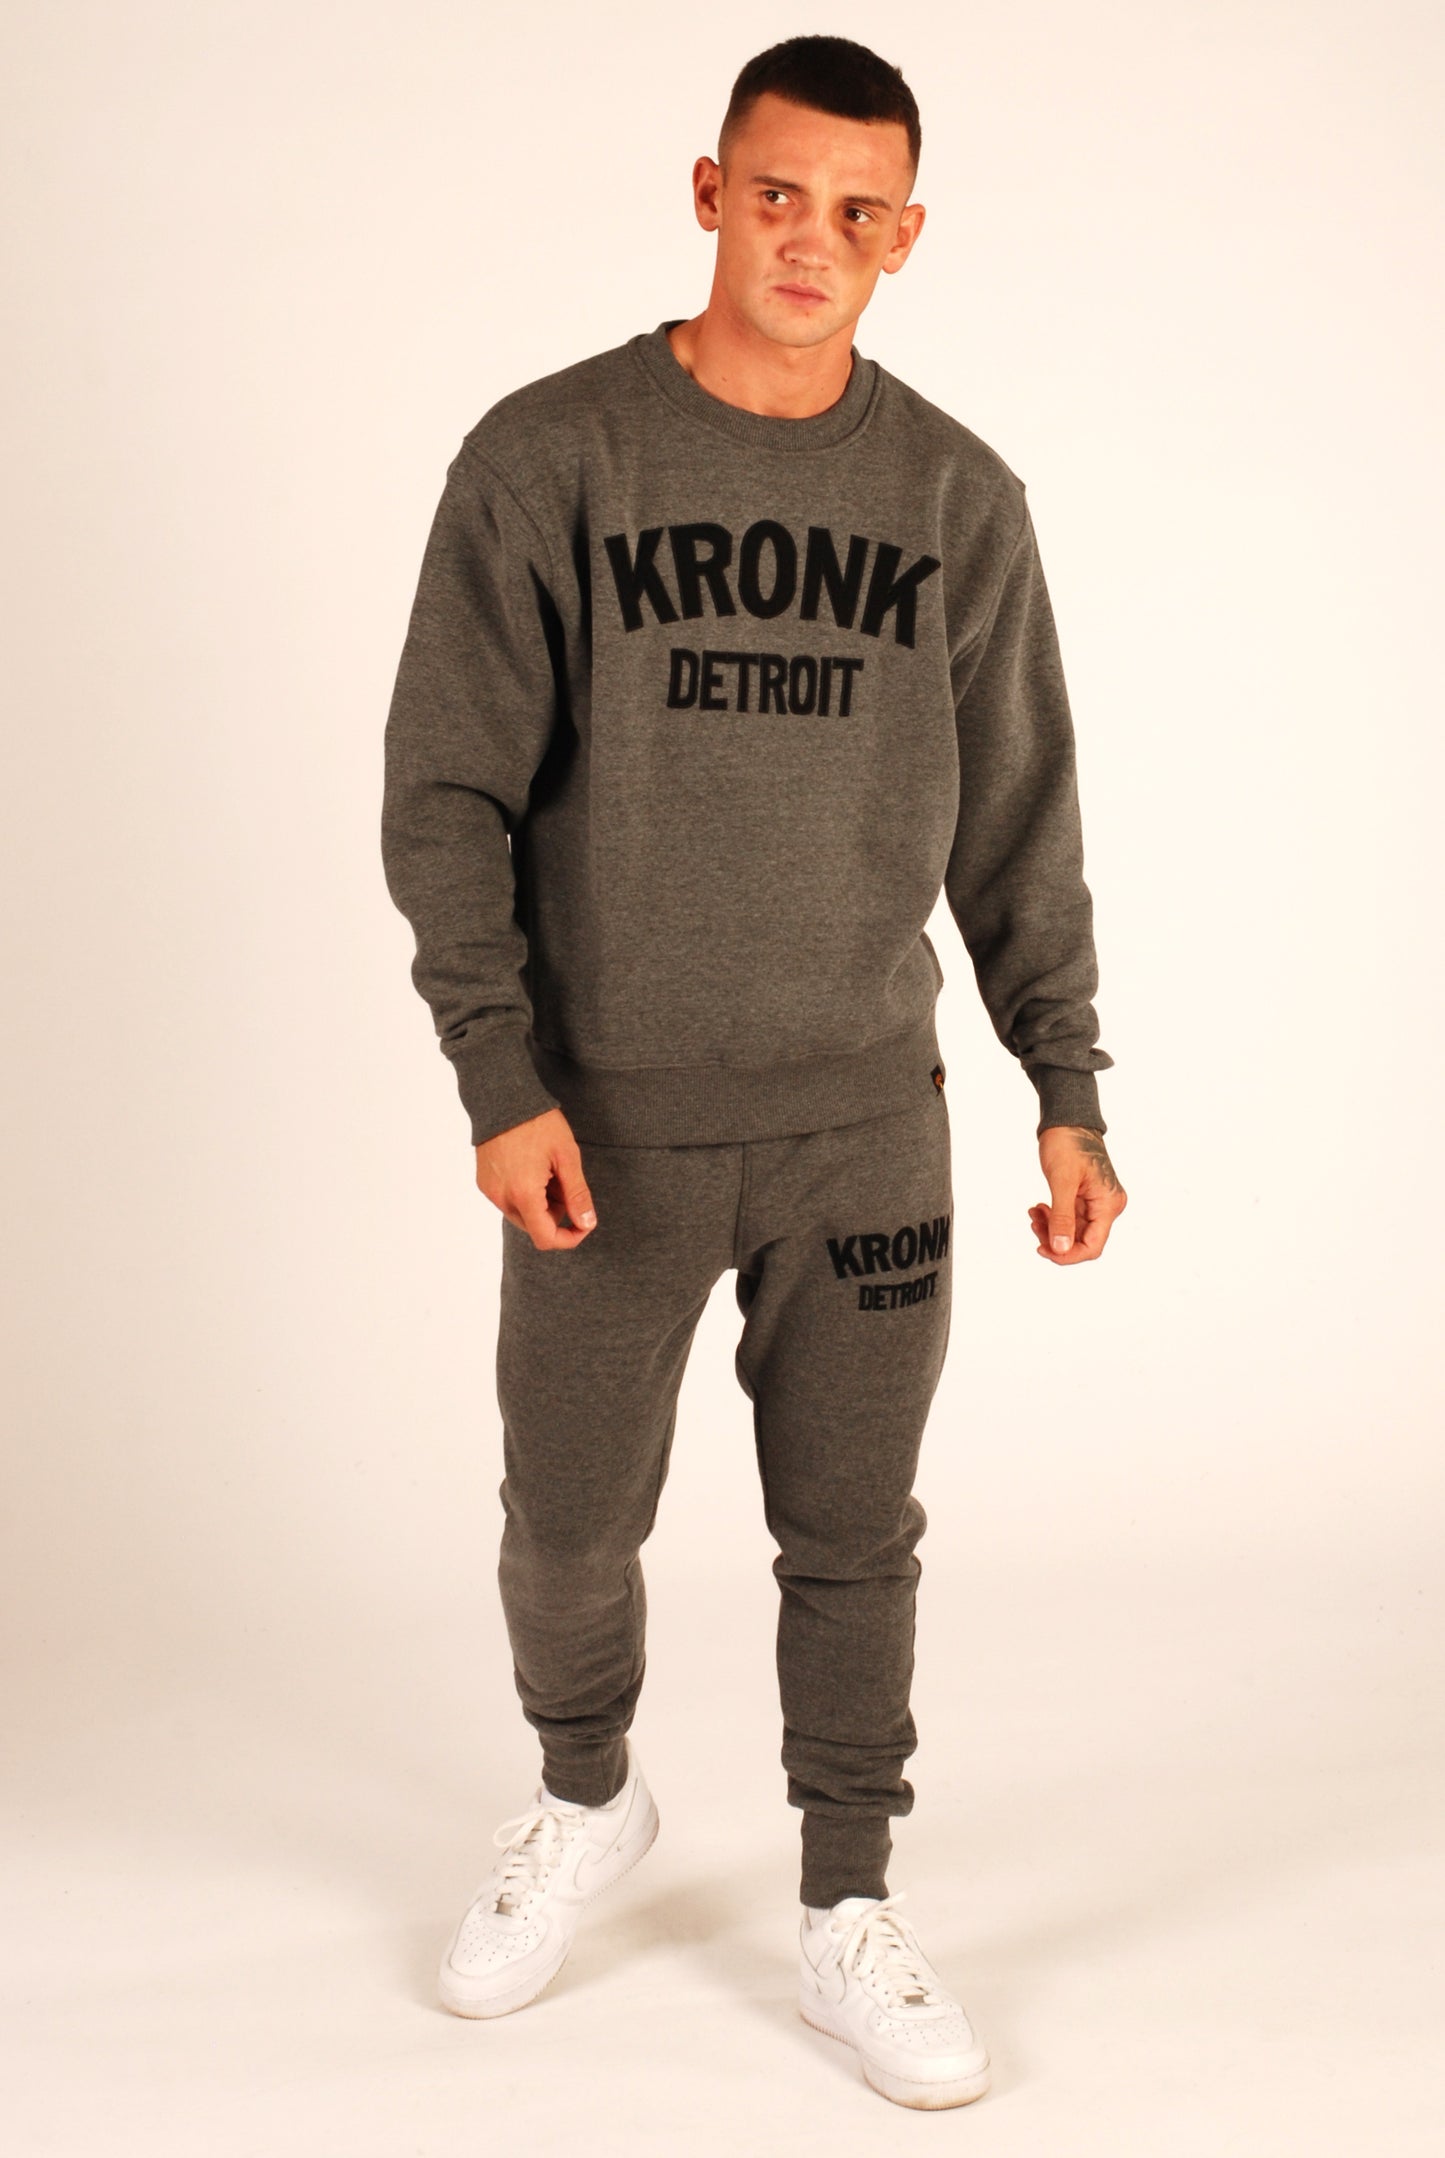 Kronk Detroit Joggers Regular Fit Charcoal with Black Applique logo